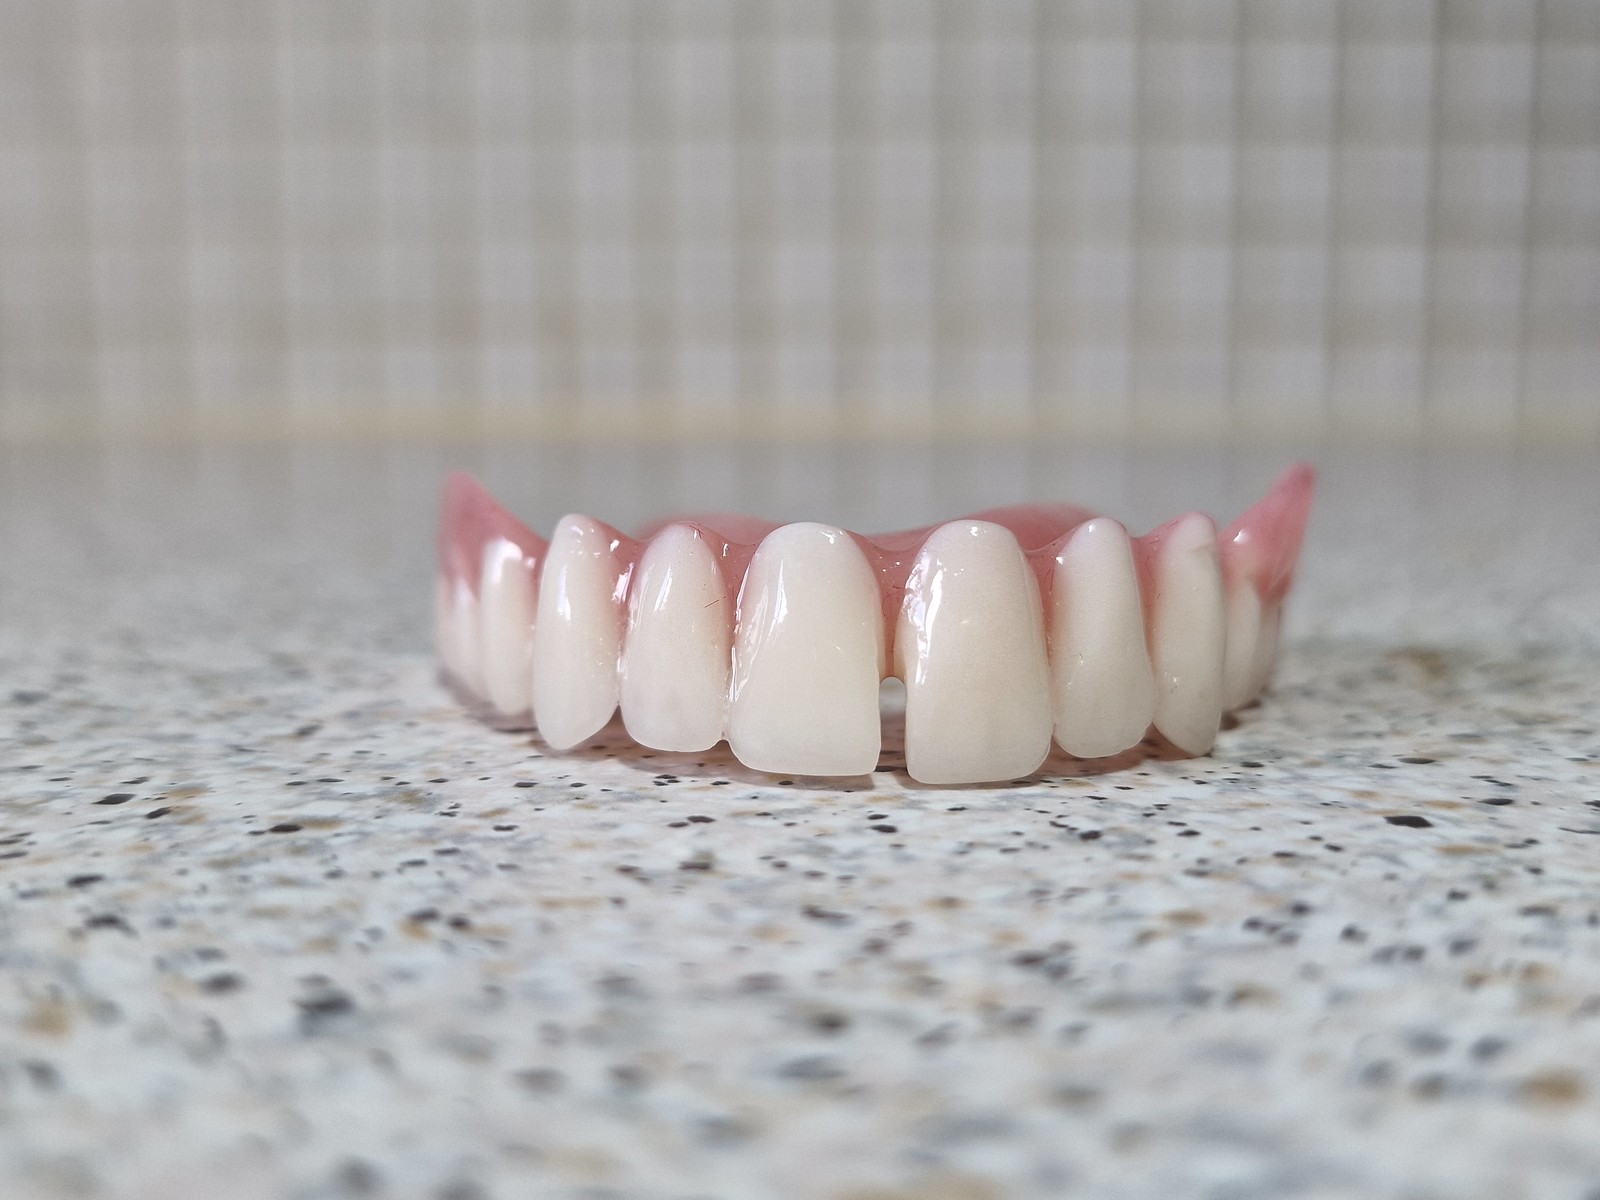 Full Upper Denture/False Teeth,Natural White Teeth with Diastema,Brand New. - $80.00